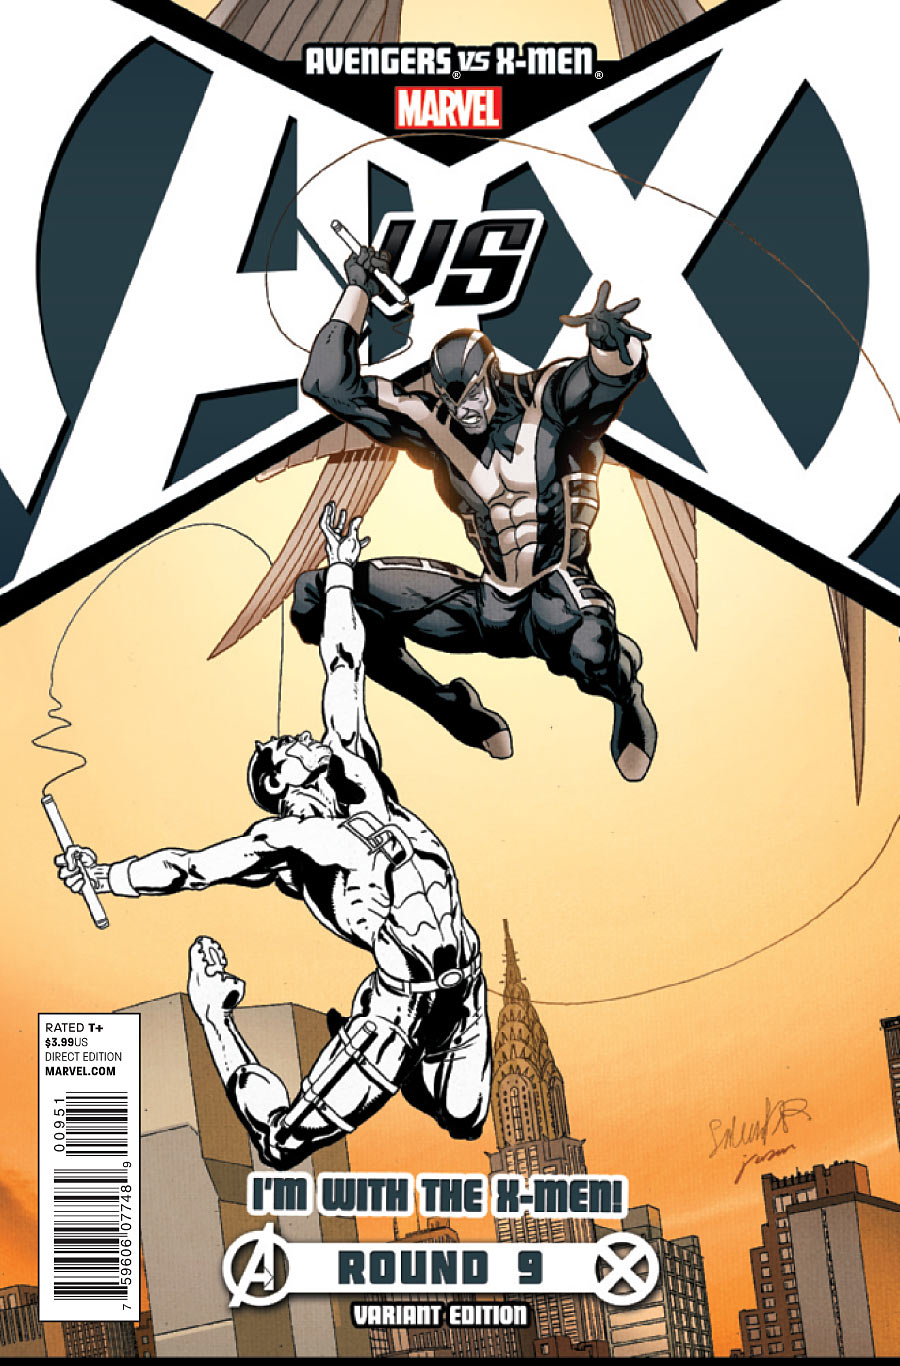 Preview de Avengers vs X-Men #9 - Vingadores - Marvel Comics - Blog Farofeiros